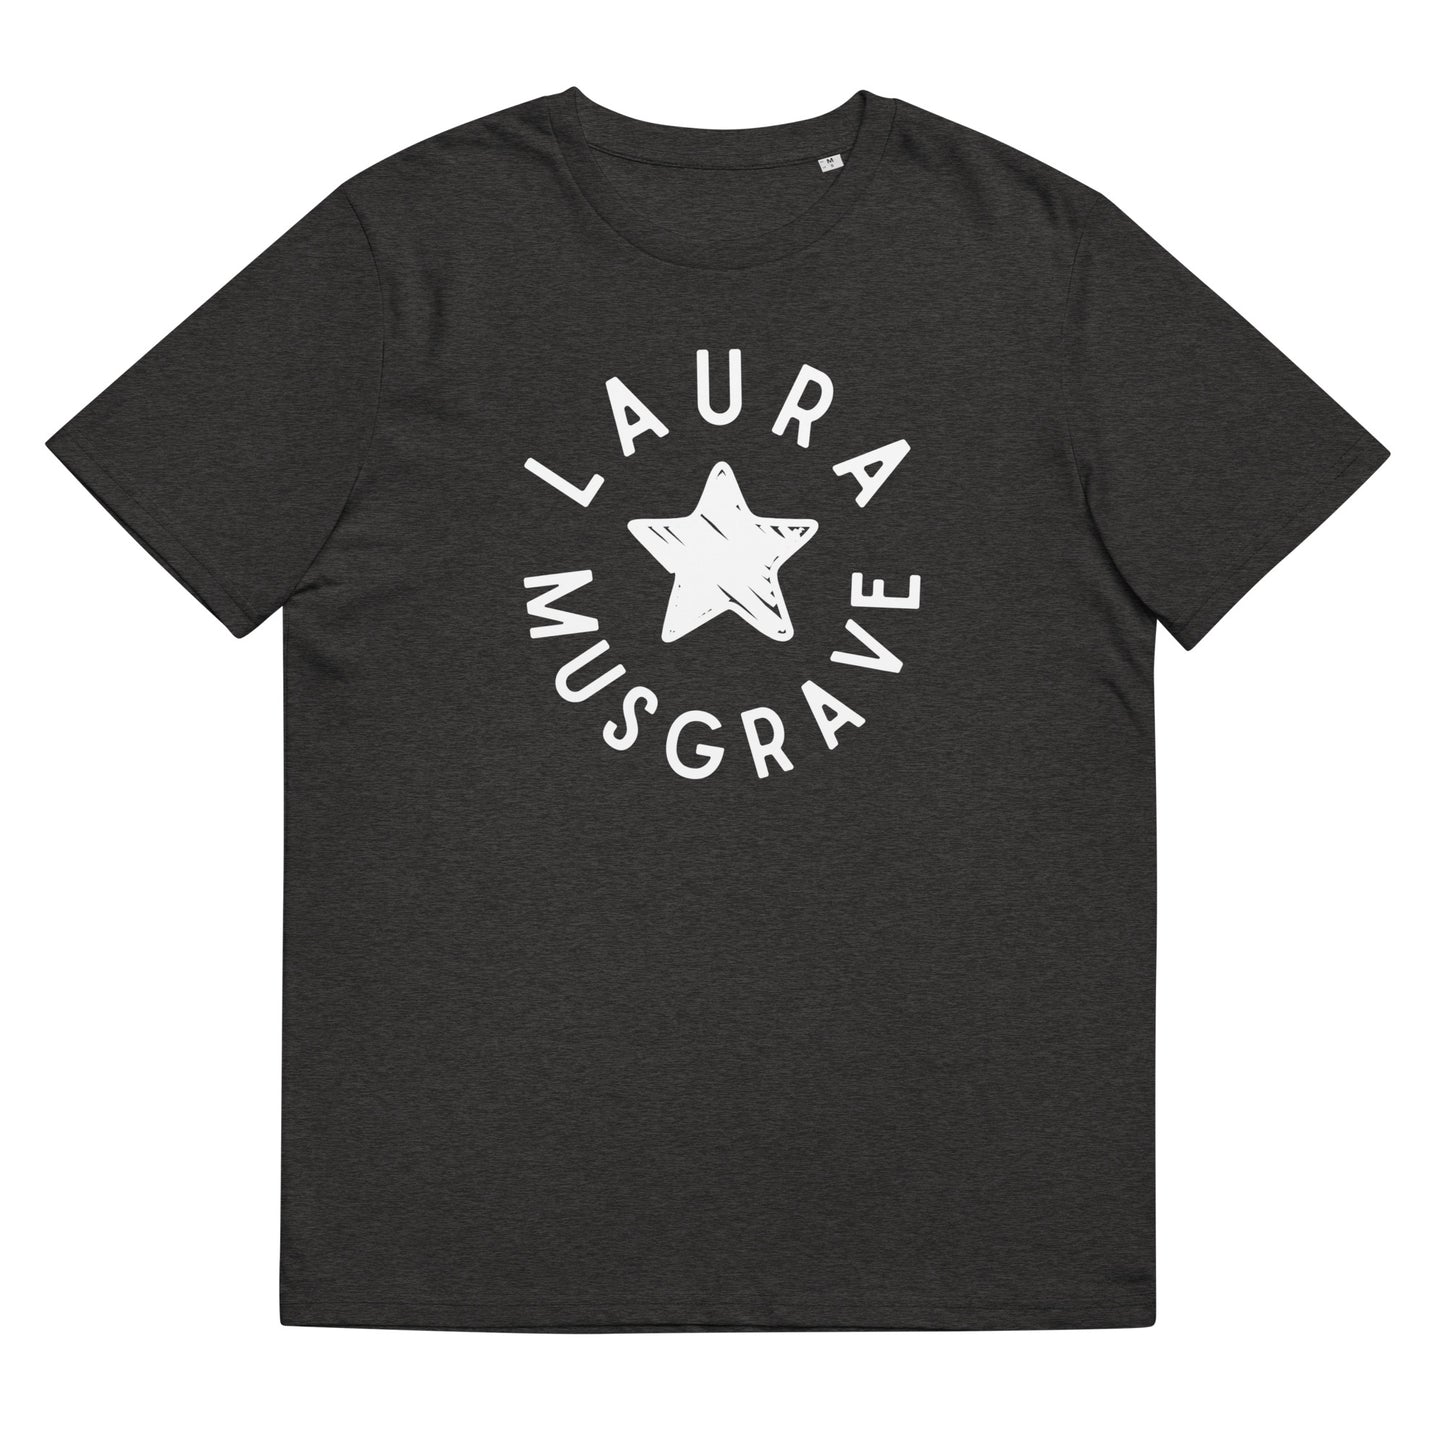 Laura Musgrave star halo t-shirt